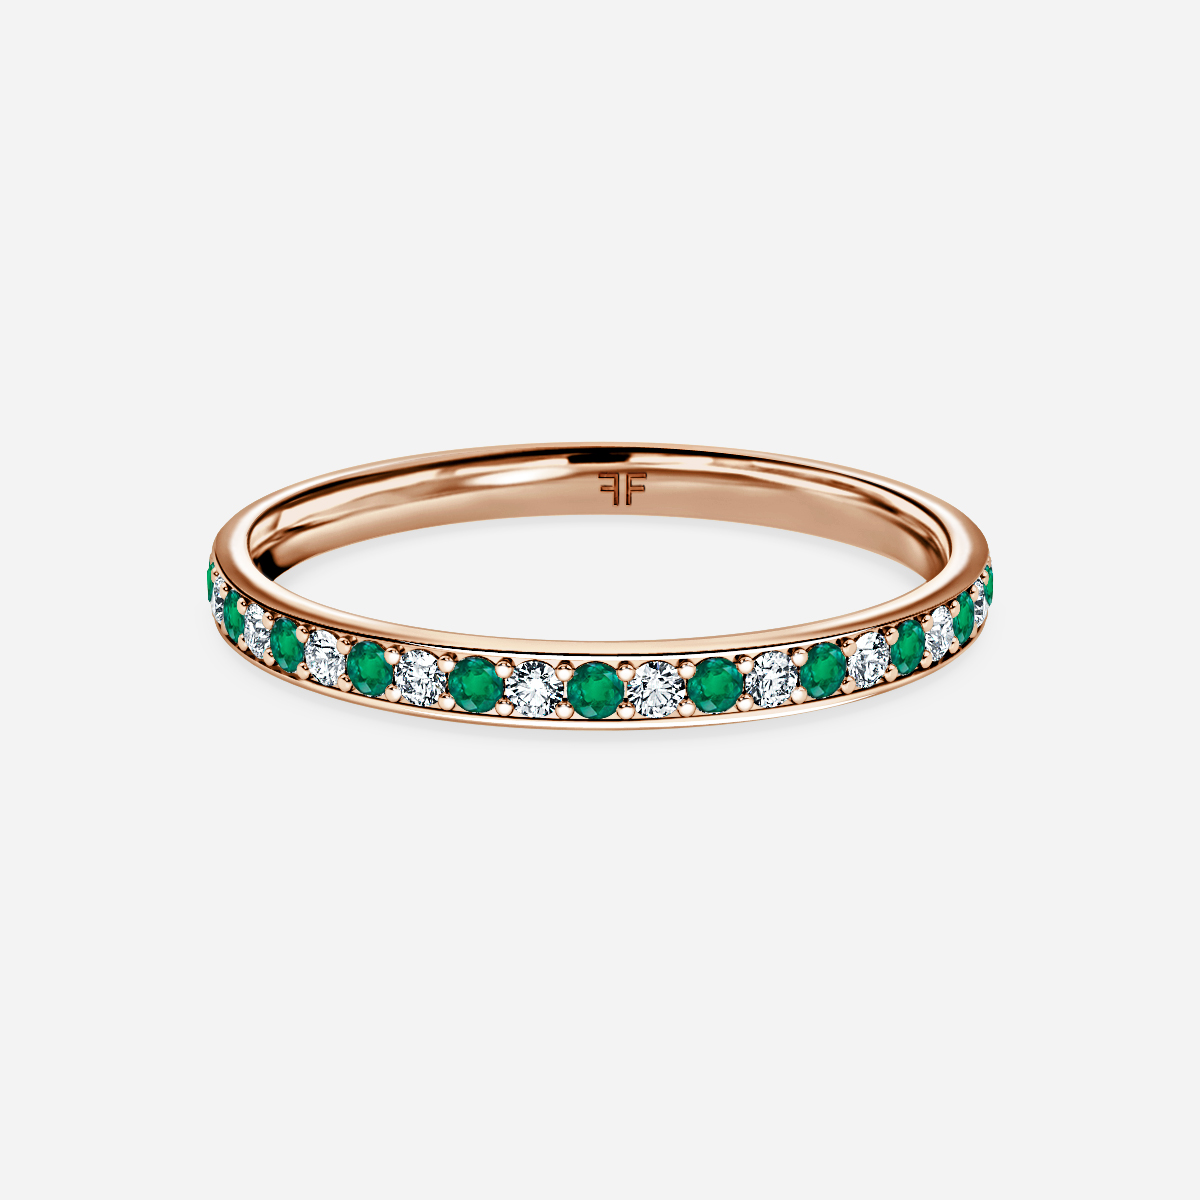 Emerald eternity rings